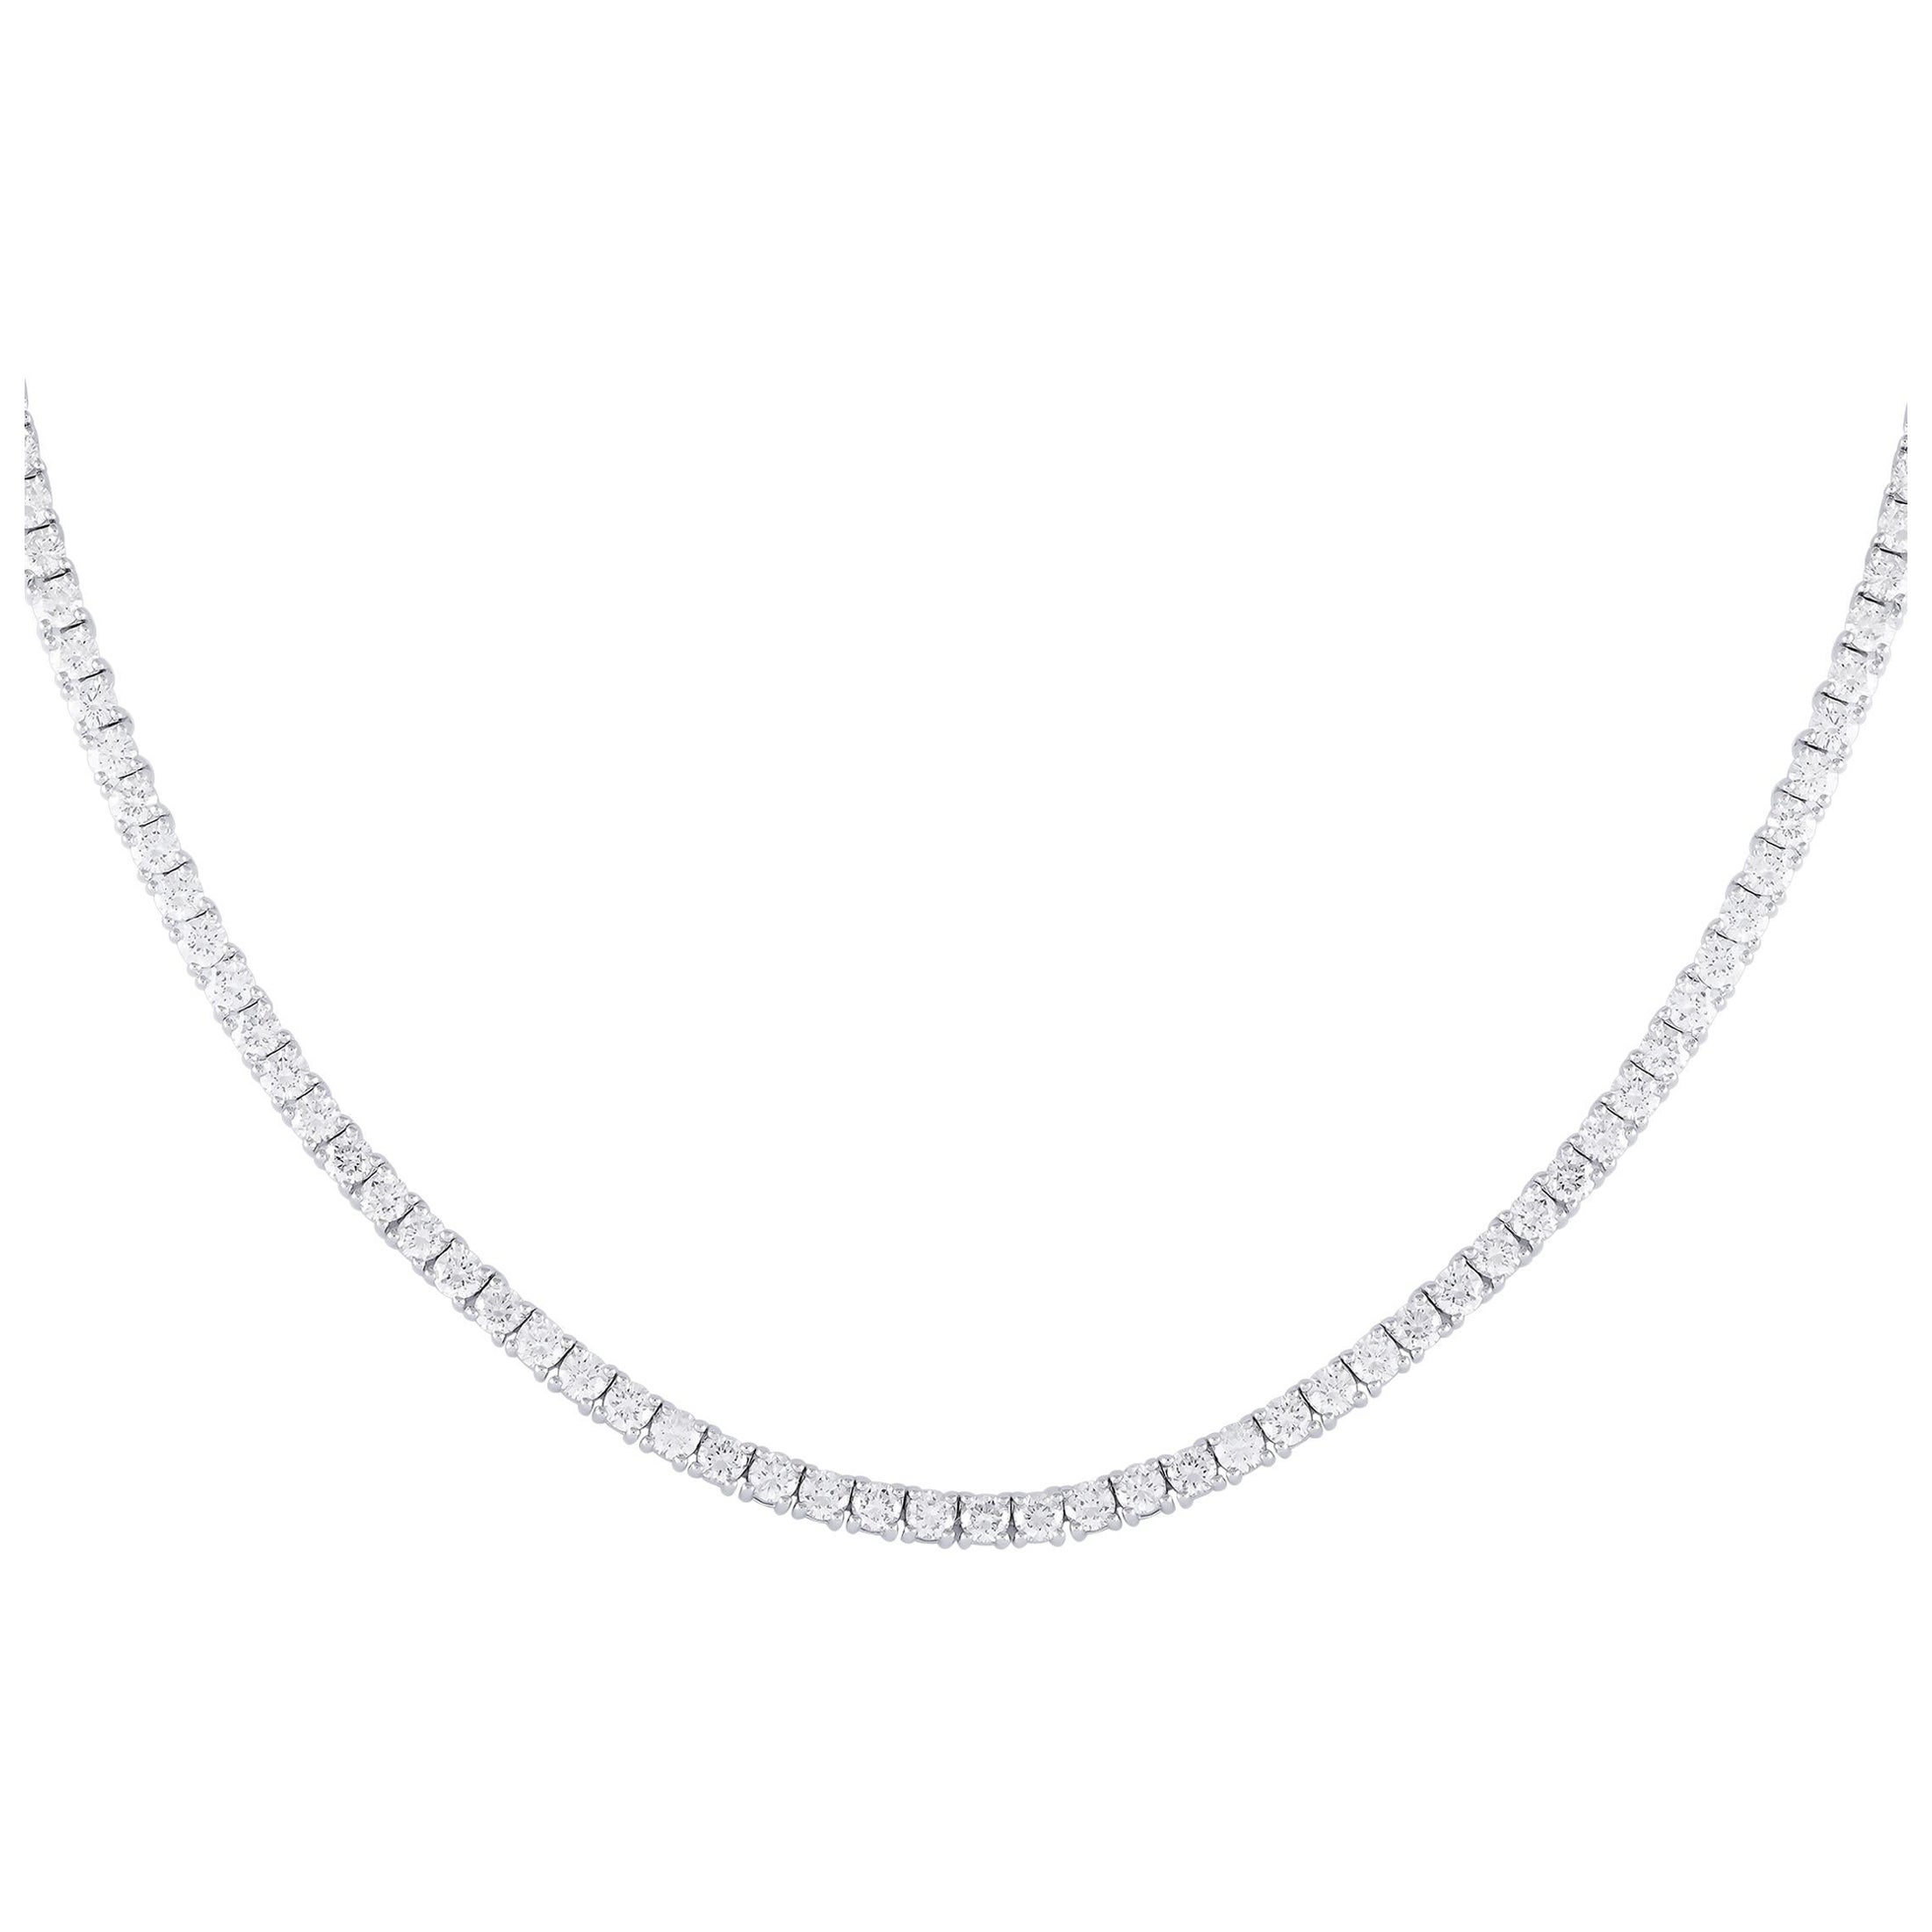 18K White Gold 10.47 ct Diamond Tennis Necklace